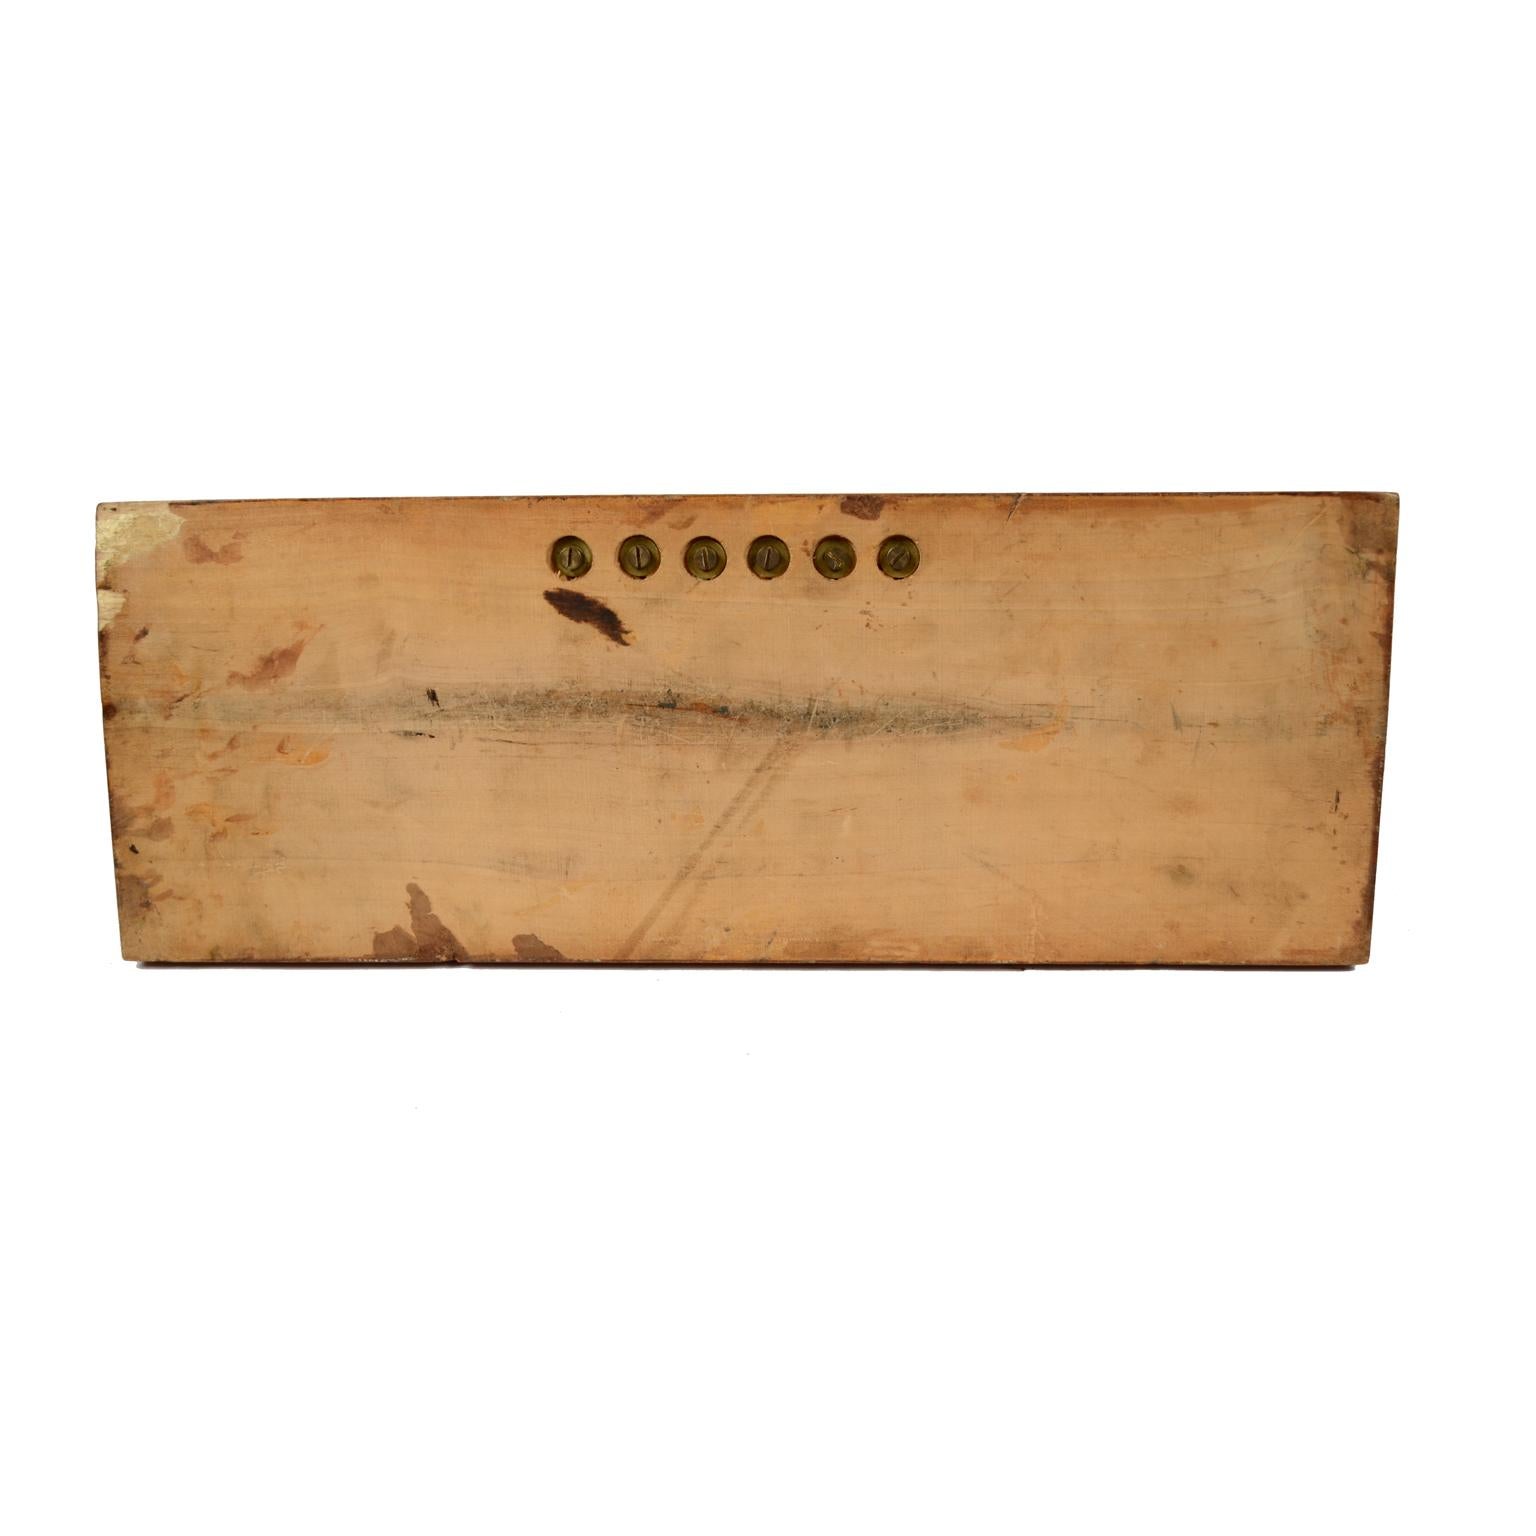 Induction Coil or Sled Antique Scientific Instrument by Du Bois Reymond 1870  For Sale 9